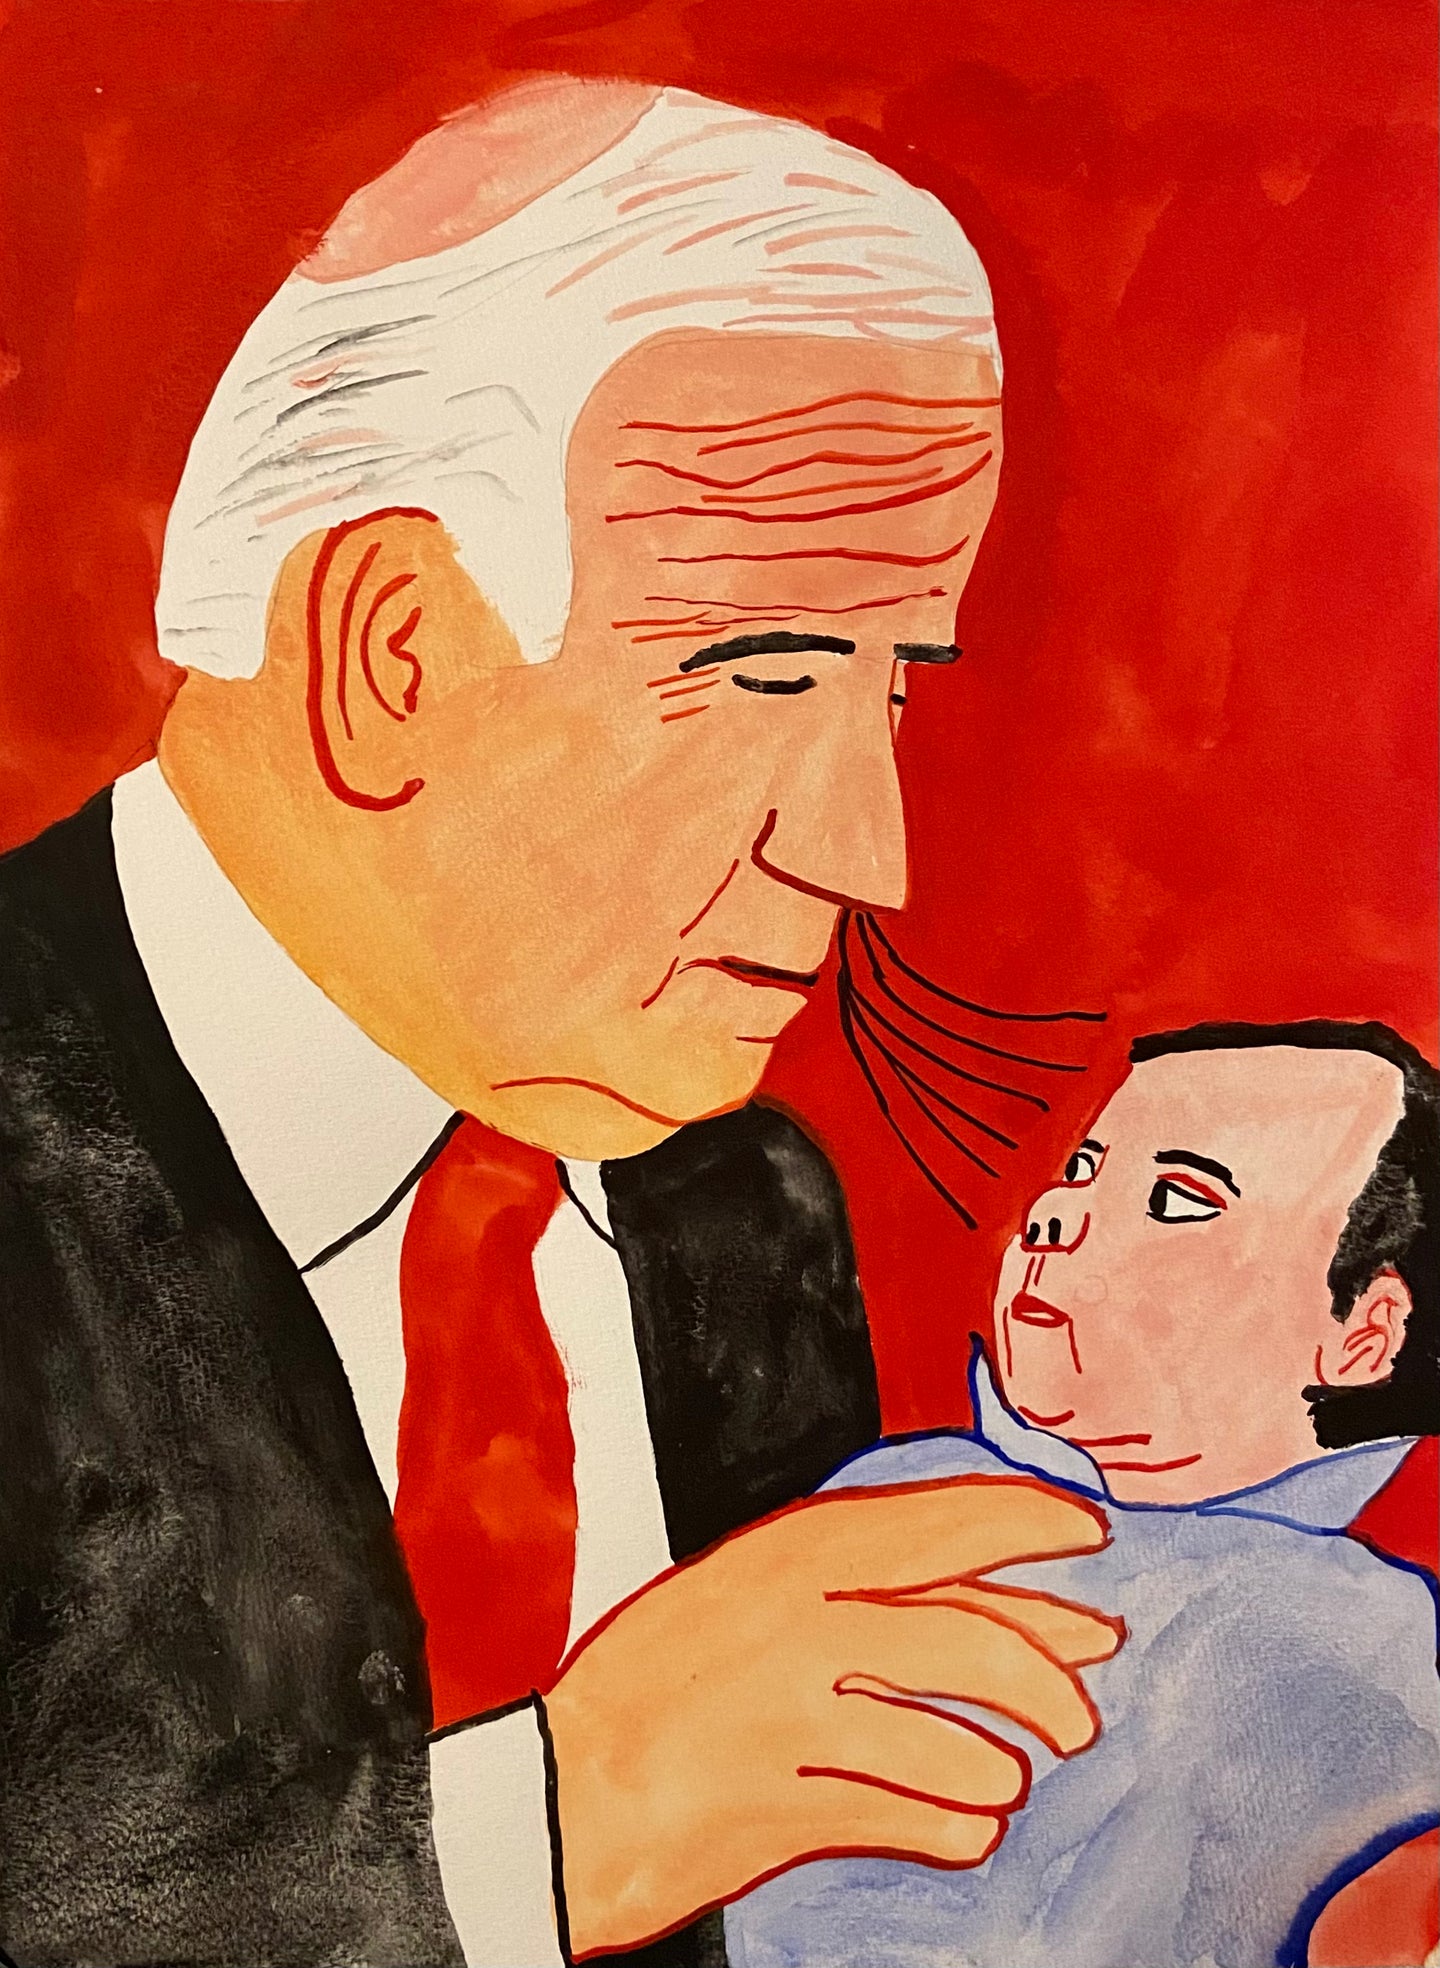 Joe Biden Sniffing Baby